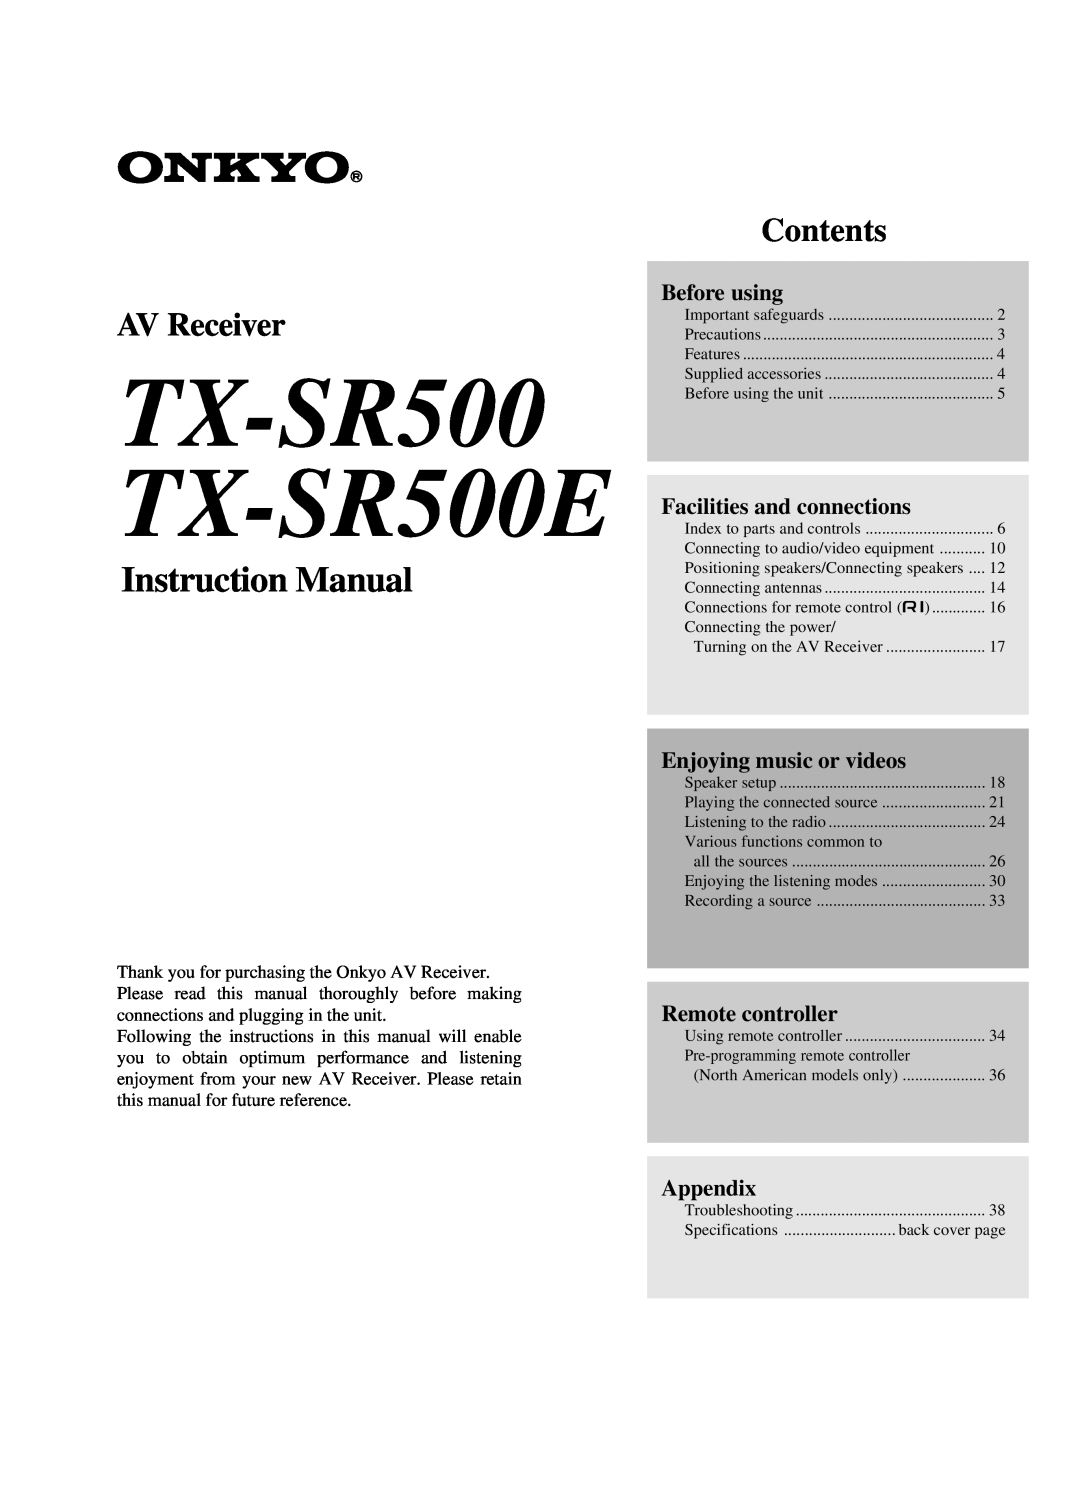 Onkyo appendix TX-SR500 TX-SR500E, AV Receiver, Contents, Before using, Facilities and connections, Remote controller 